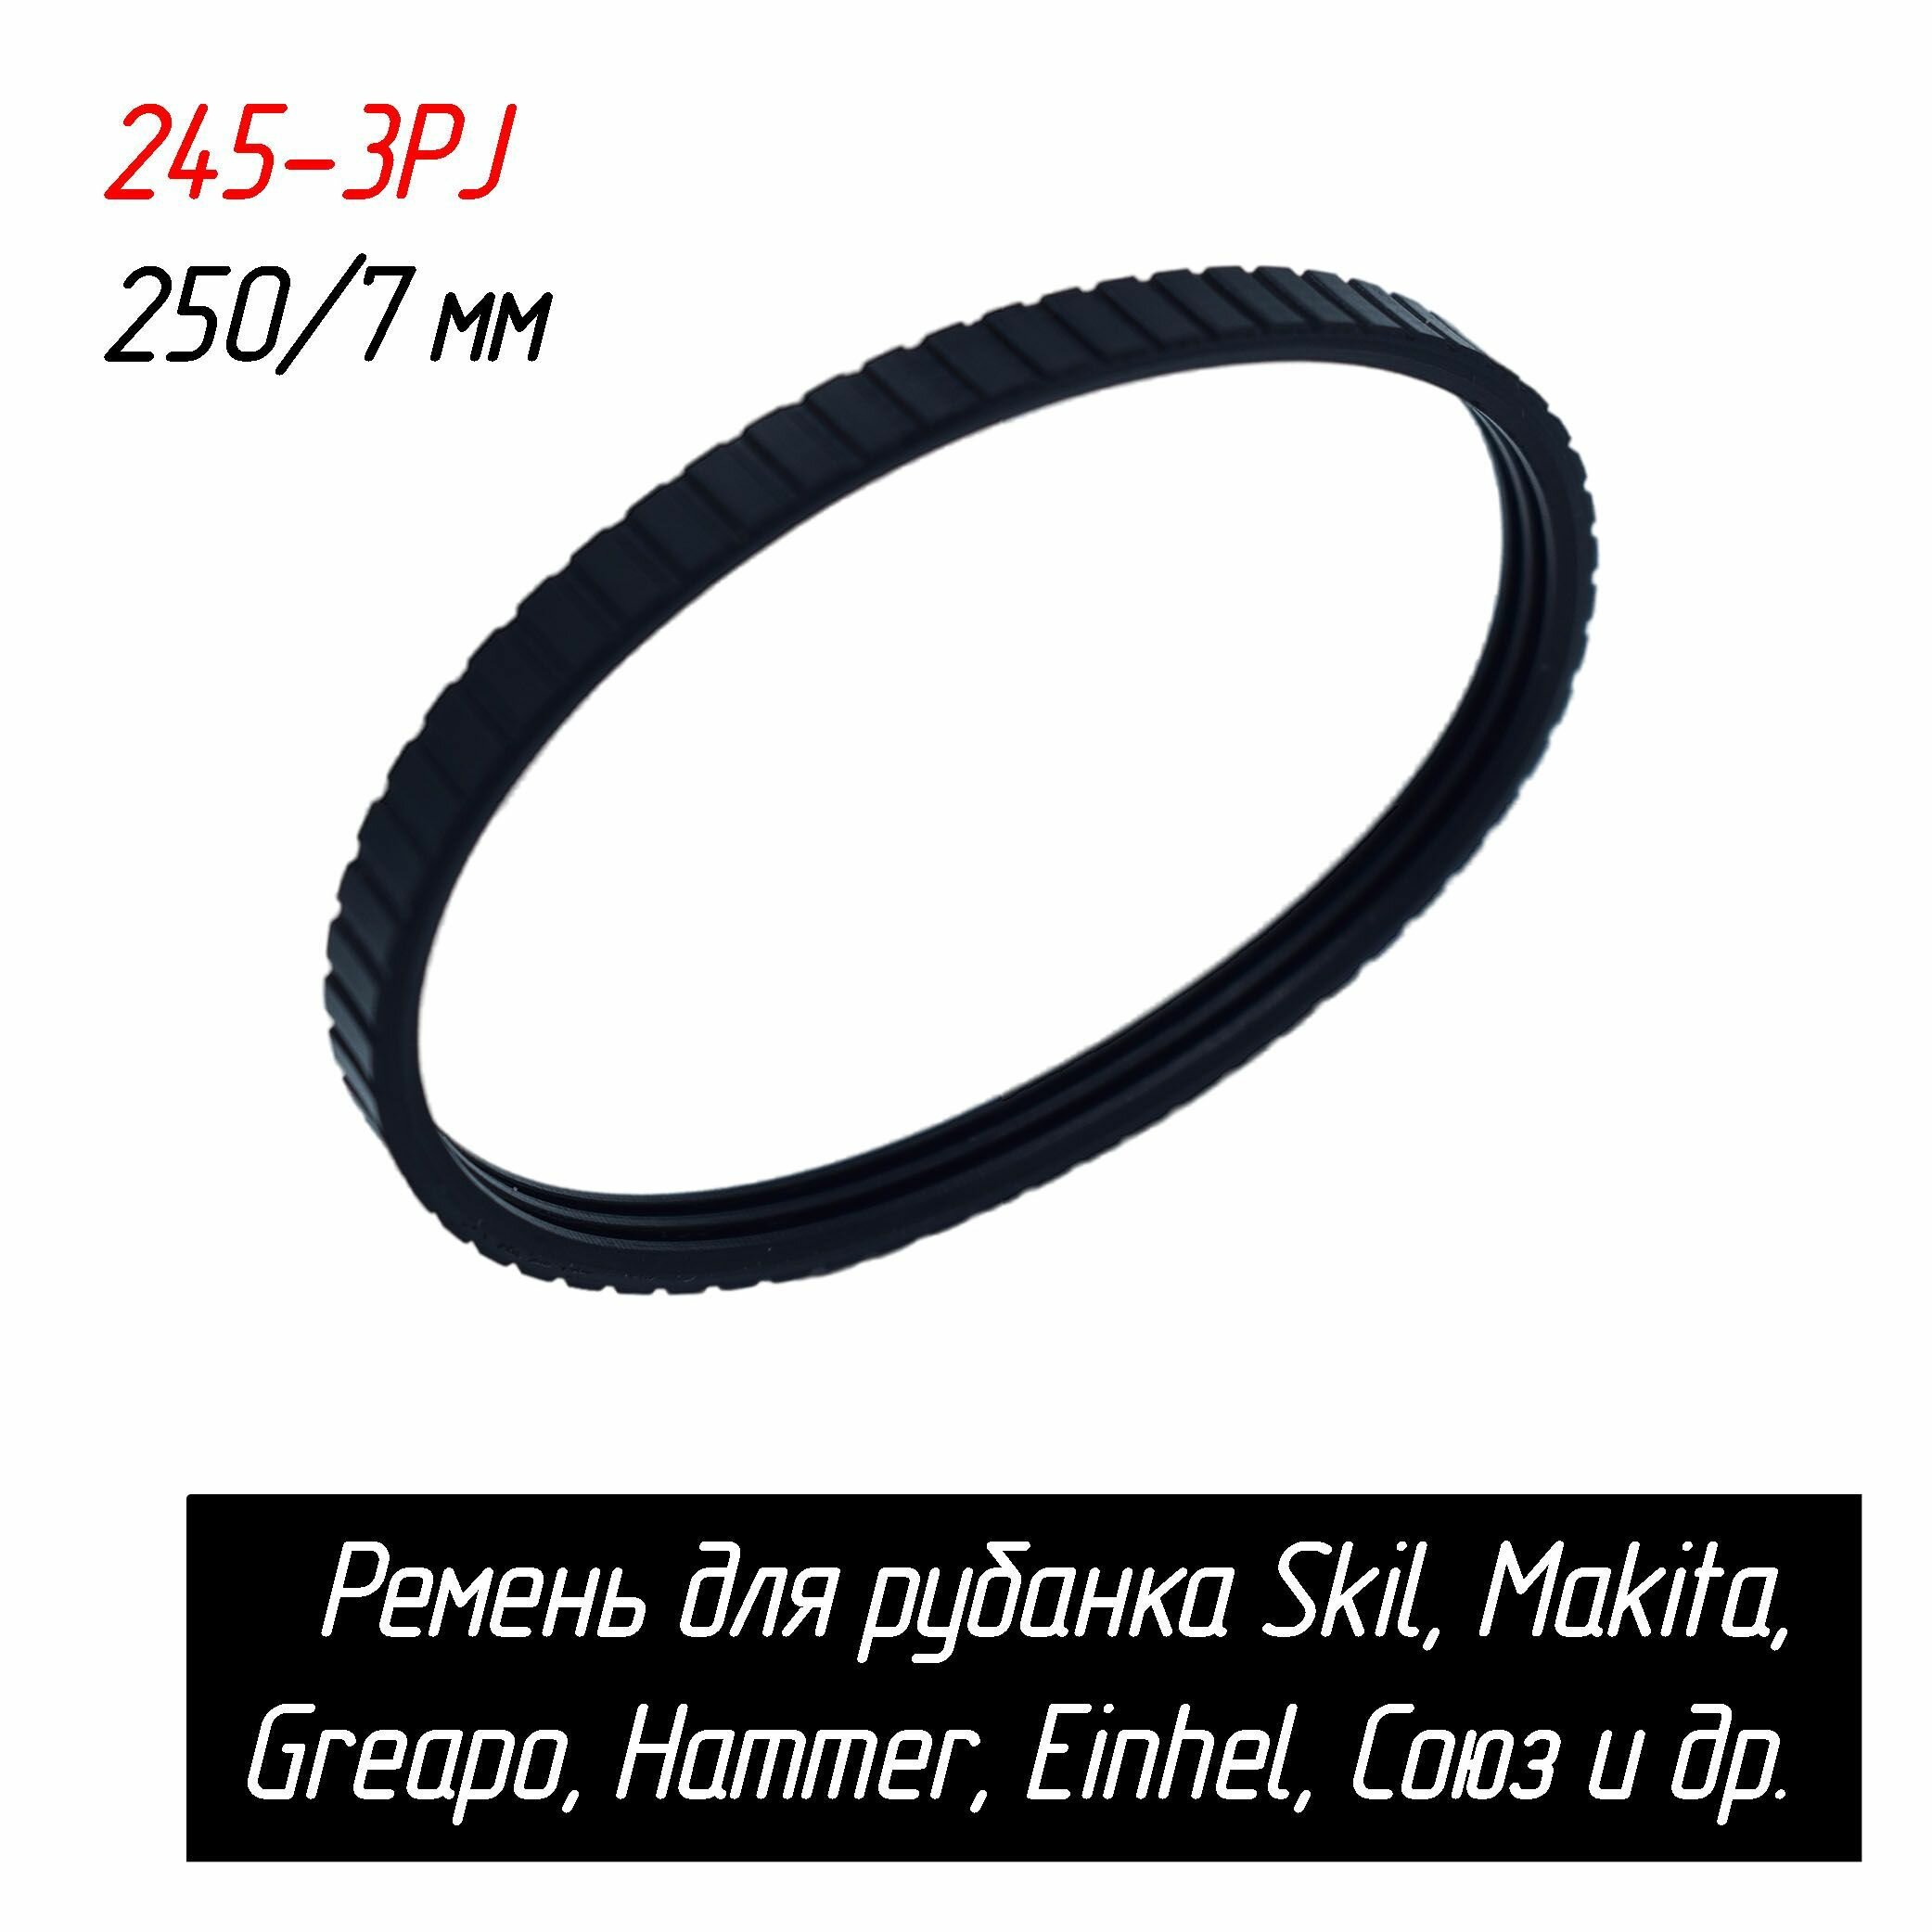 Ремень 245-3PJ (250/7 мм) для рубанка Skil 1555/1560 9045 Greapo PPLH 822H Hammer RNK-600 Einhel Союз (2610394629 AEZ)